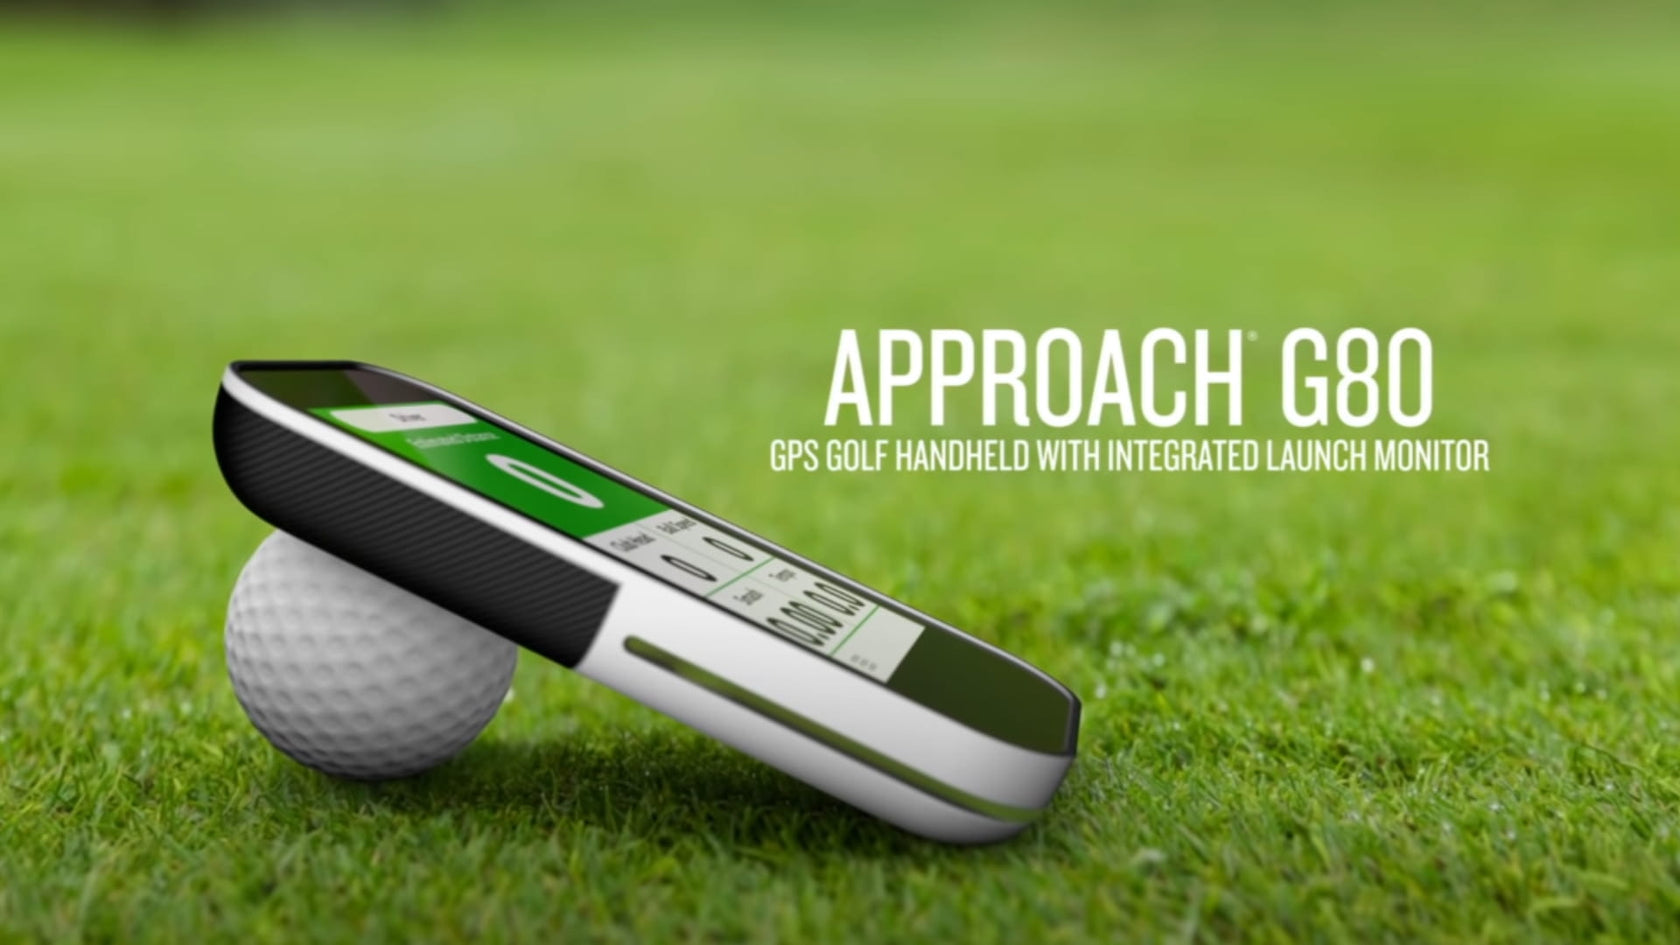 Garmin Approach g80 lifestyle image on golf course grass